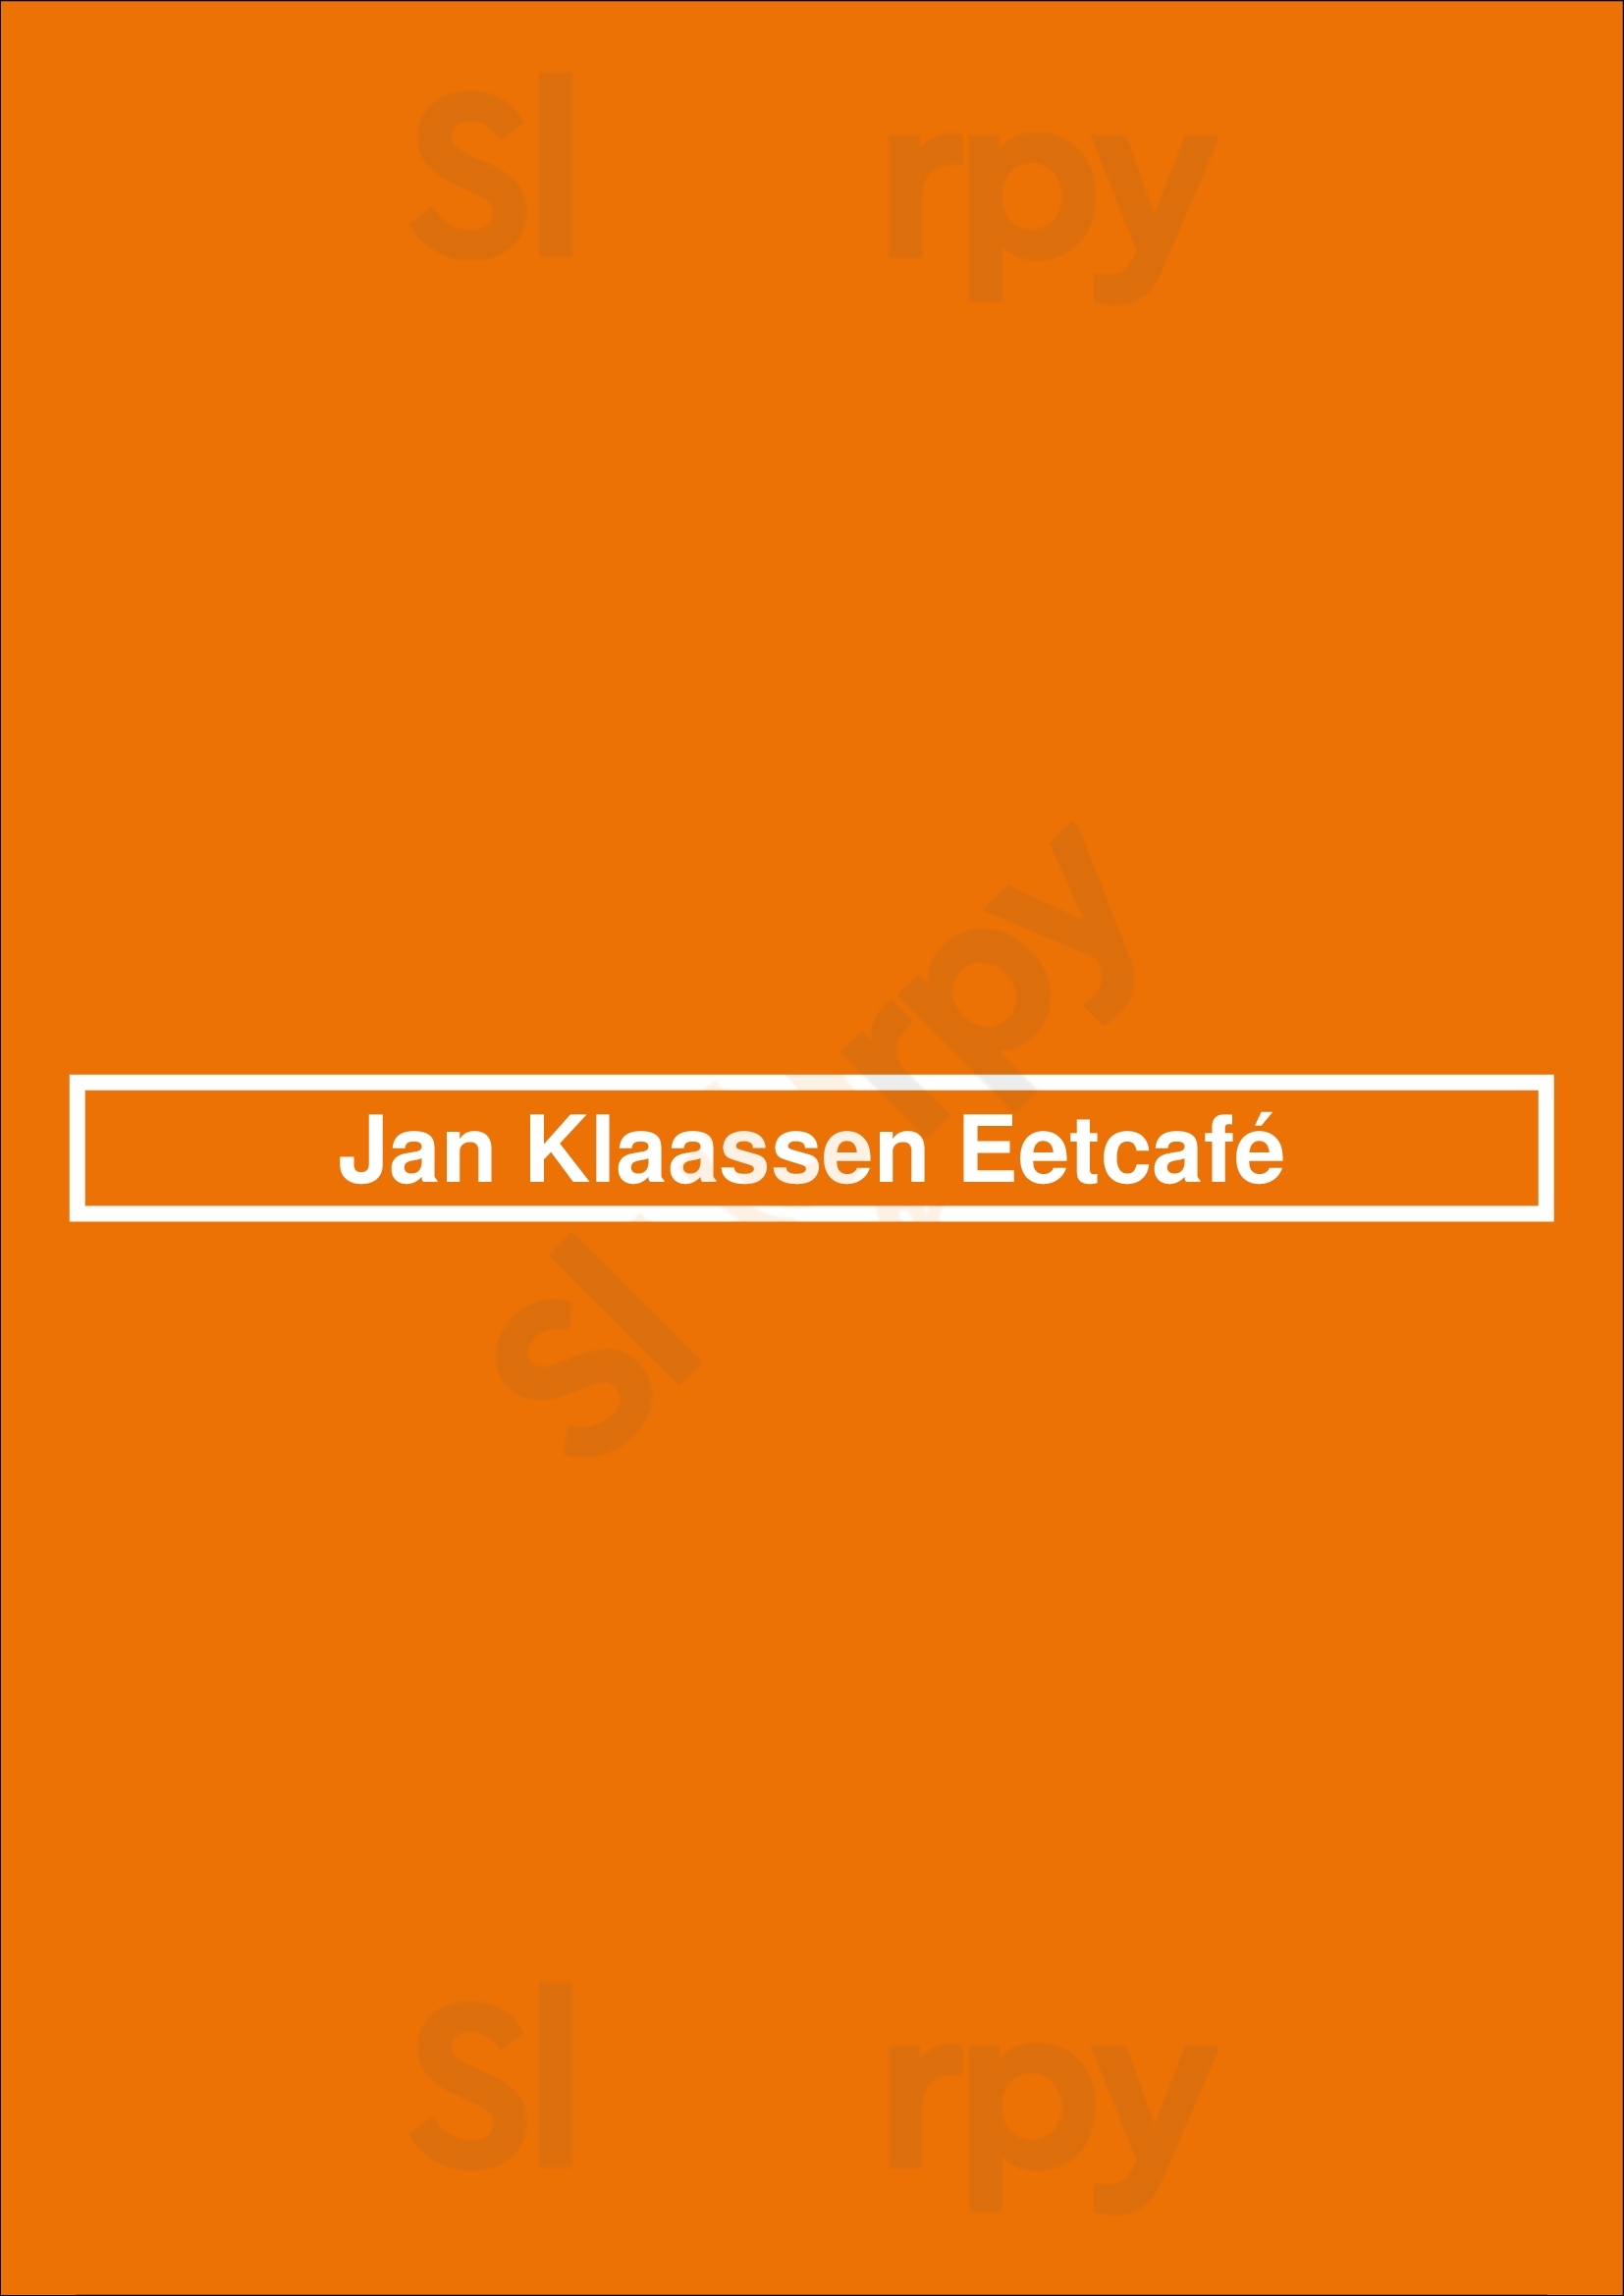 Jan Klaassen Eetcafé Nijmegen Menu - 1